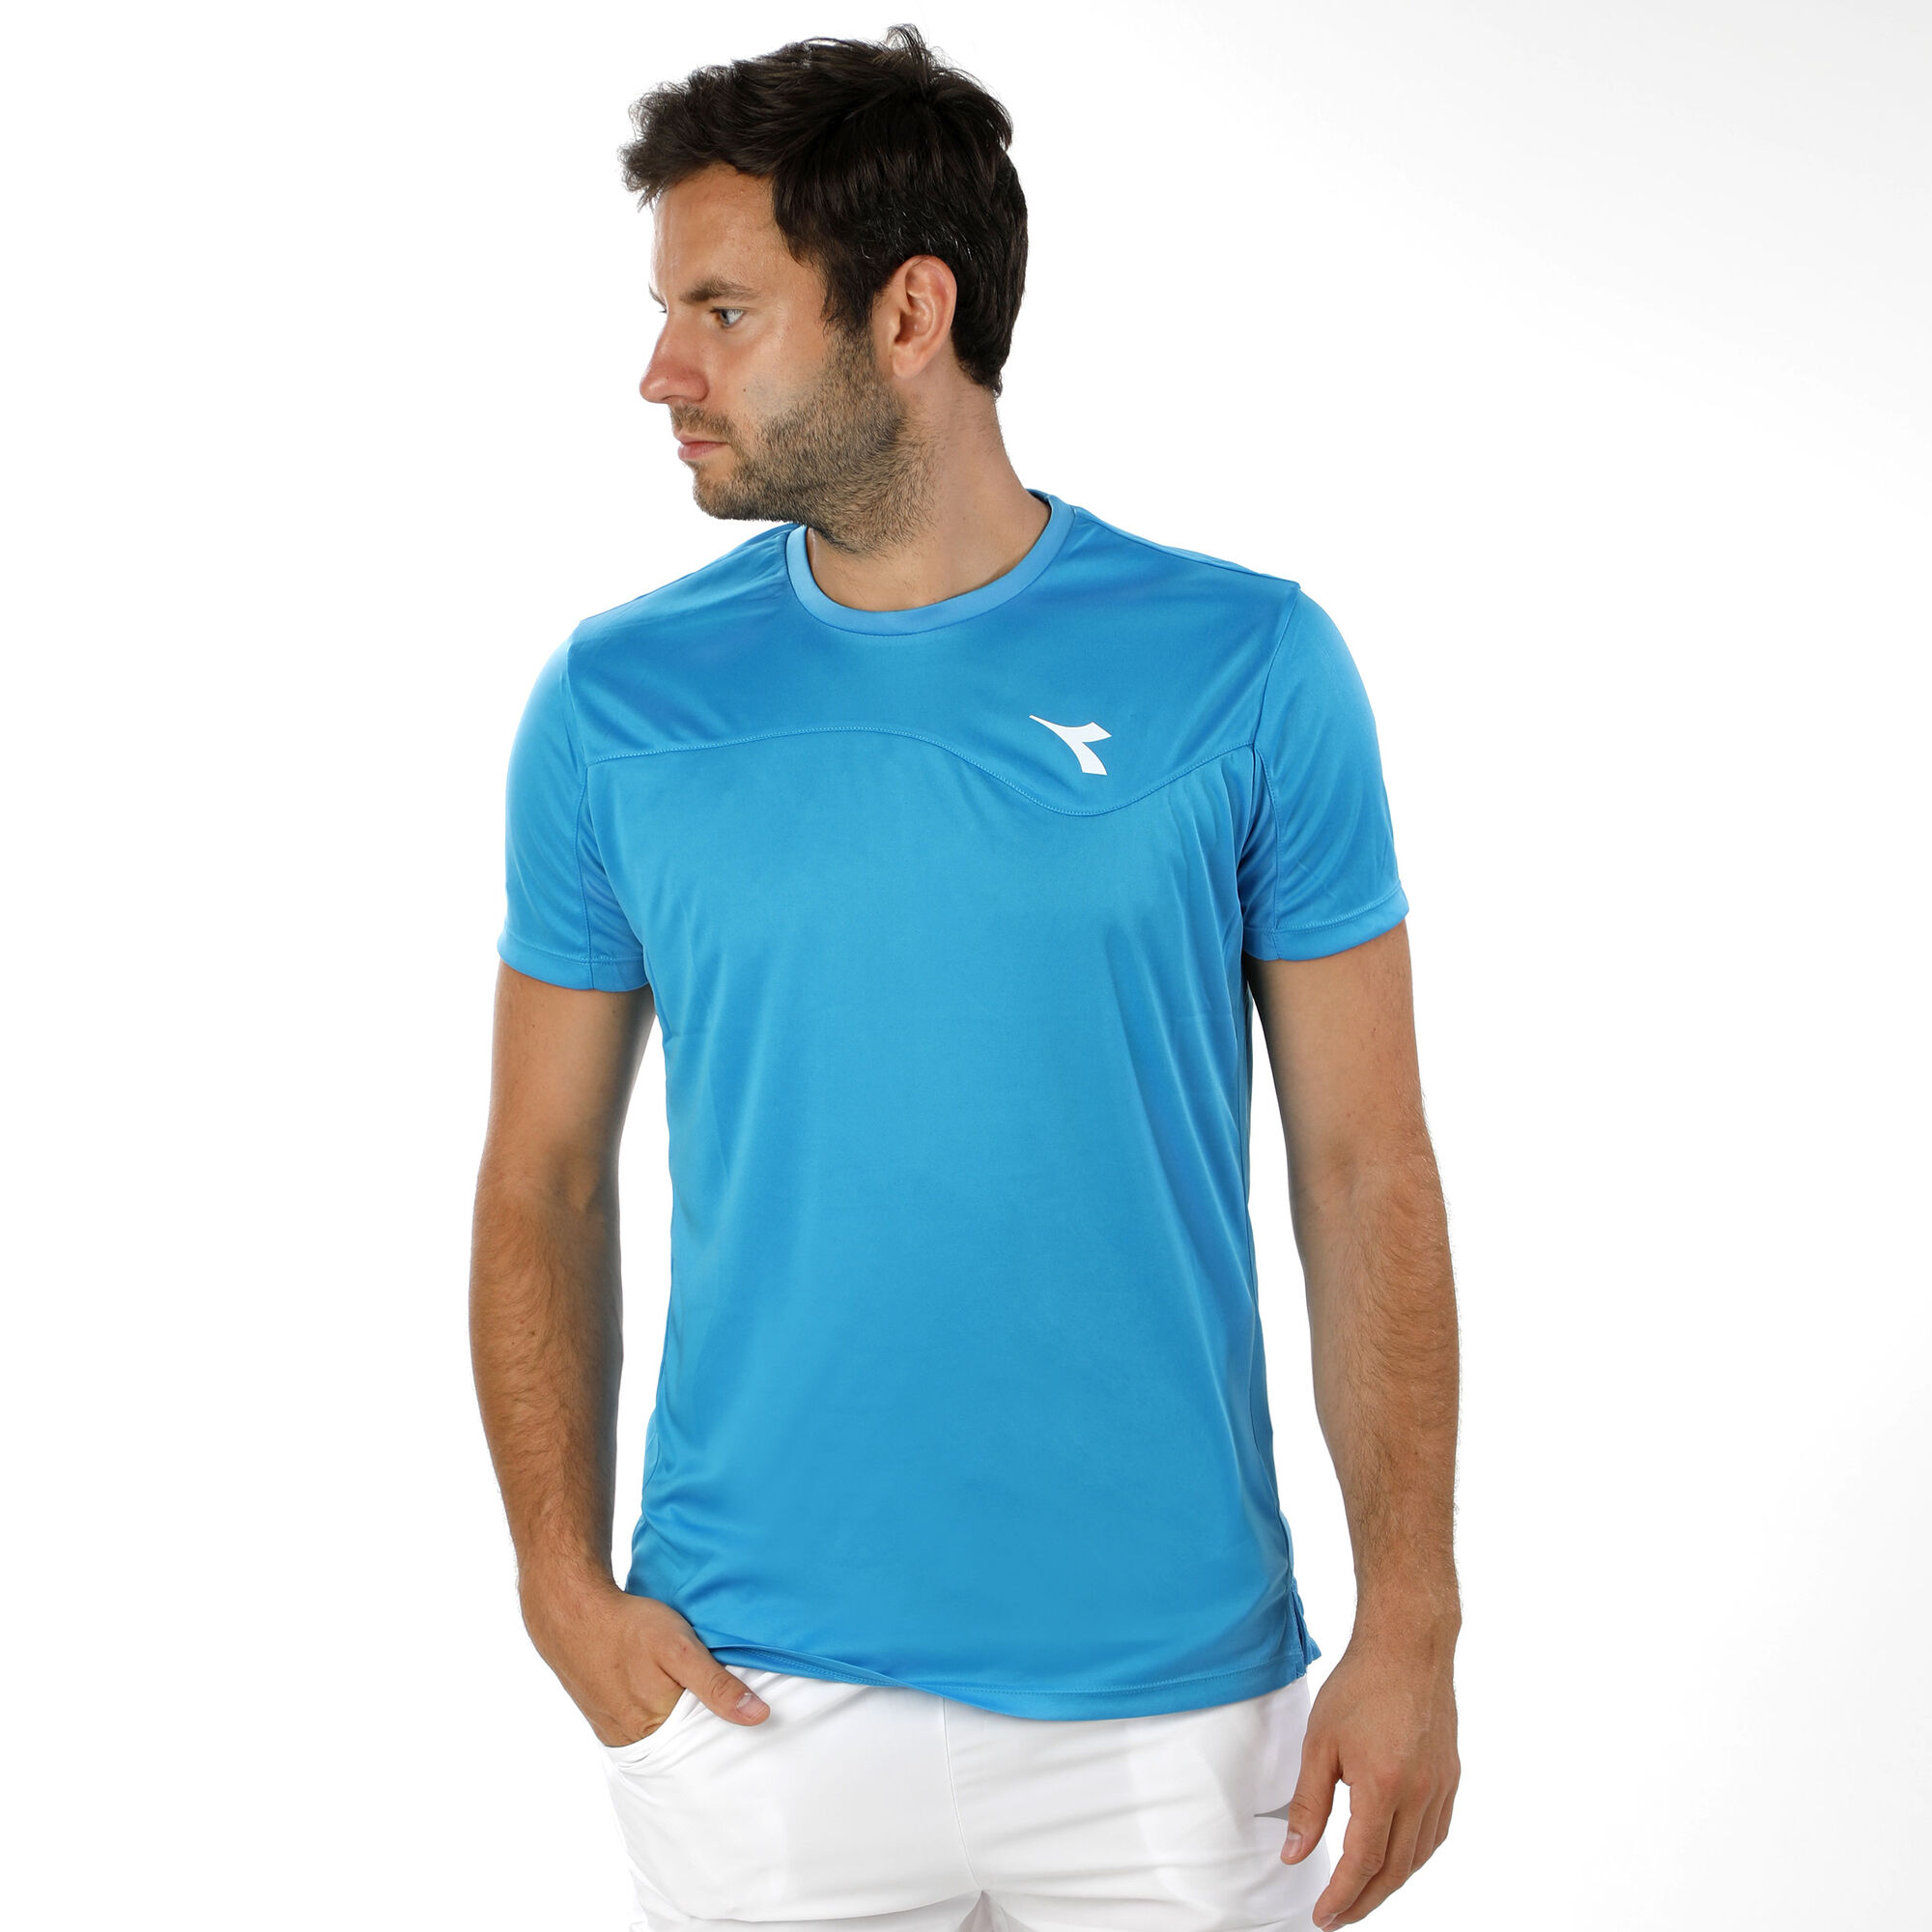 Buy Diadora Team T-Shirt Men Blue, White online | Tennis Point COM